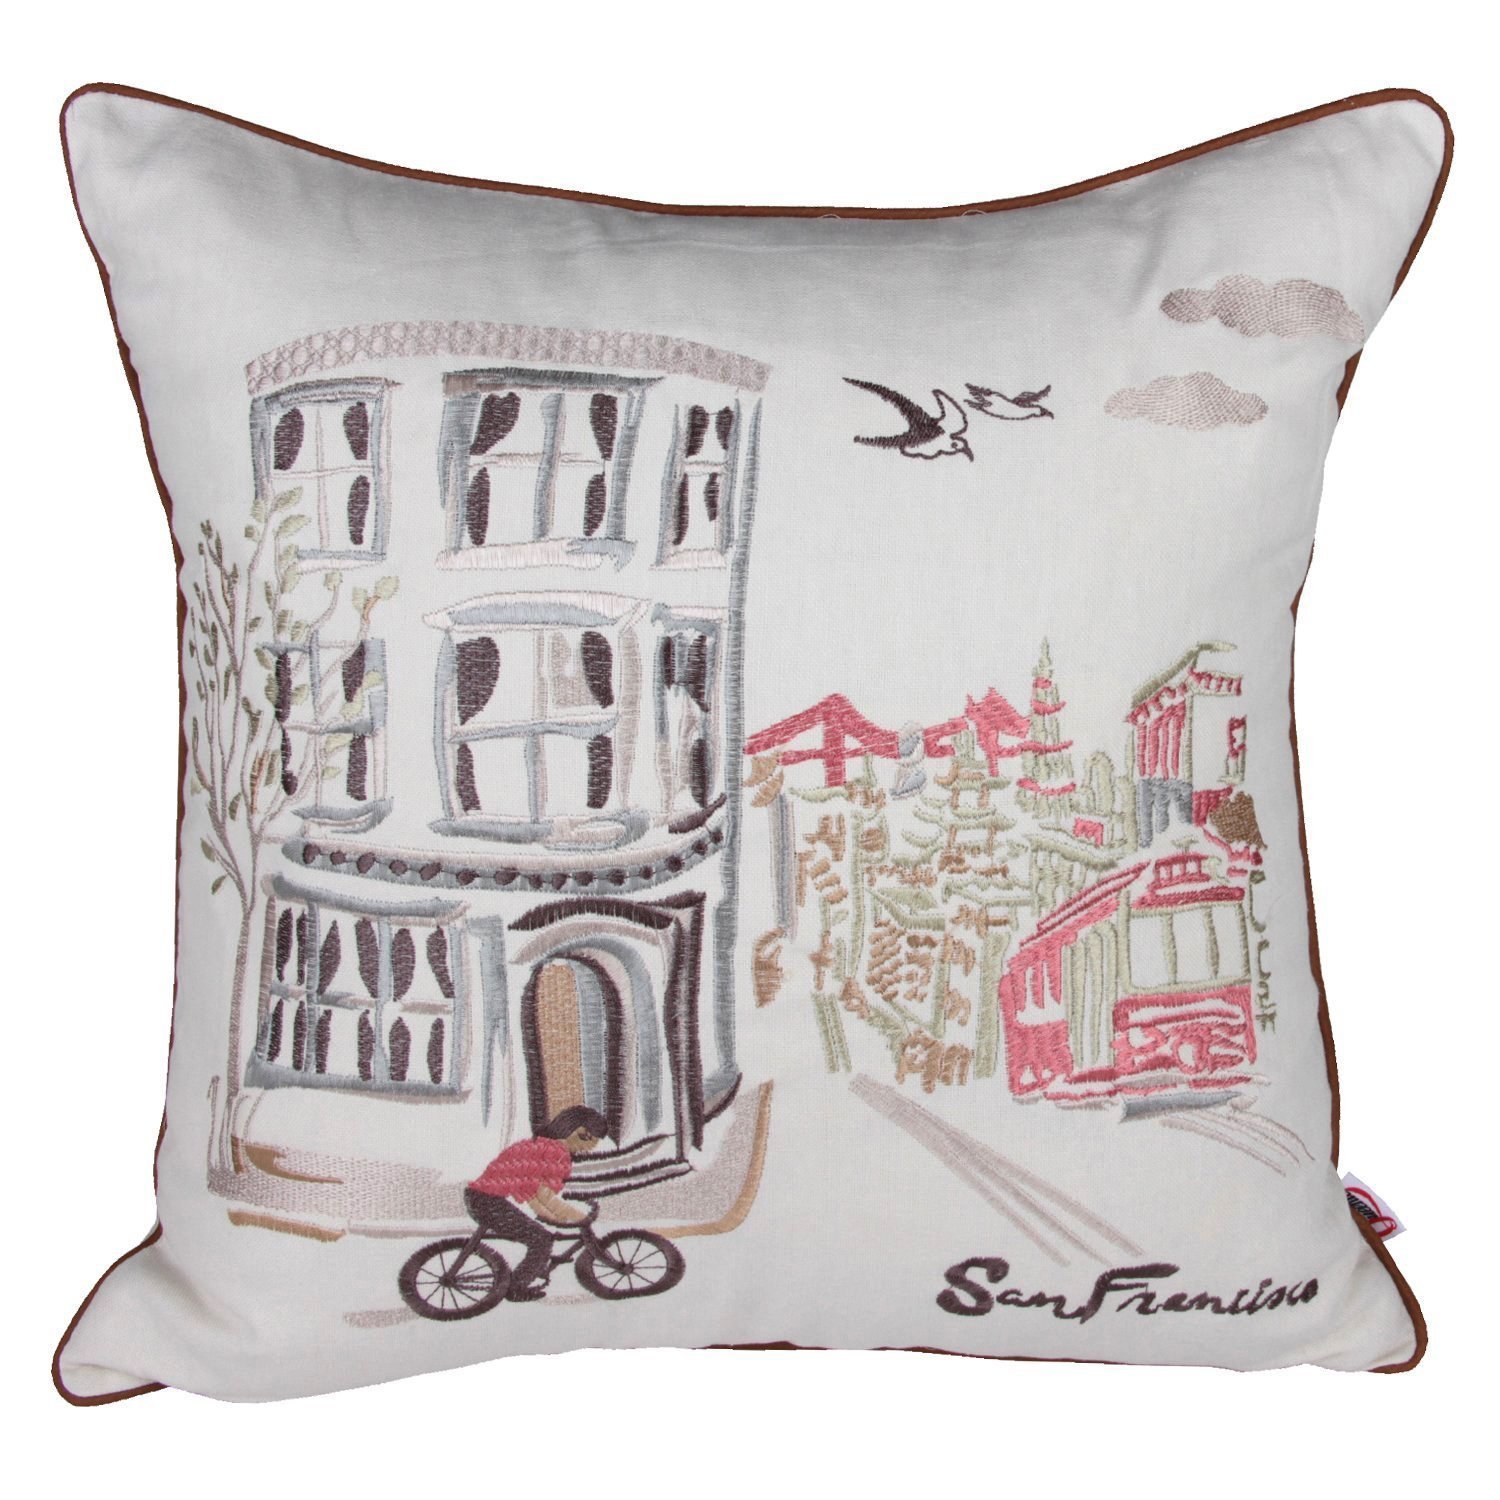 a decorative pillow featuring a San Francisco street scene